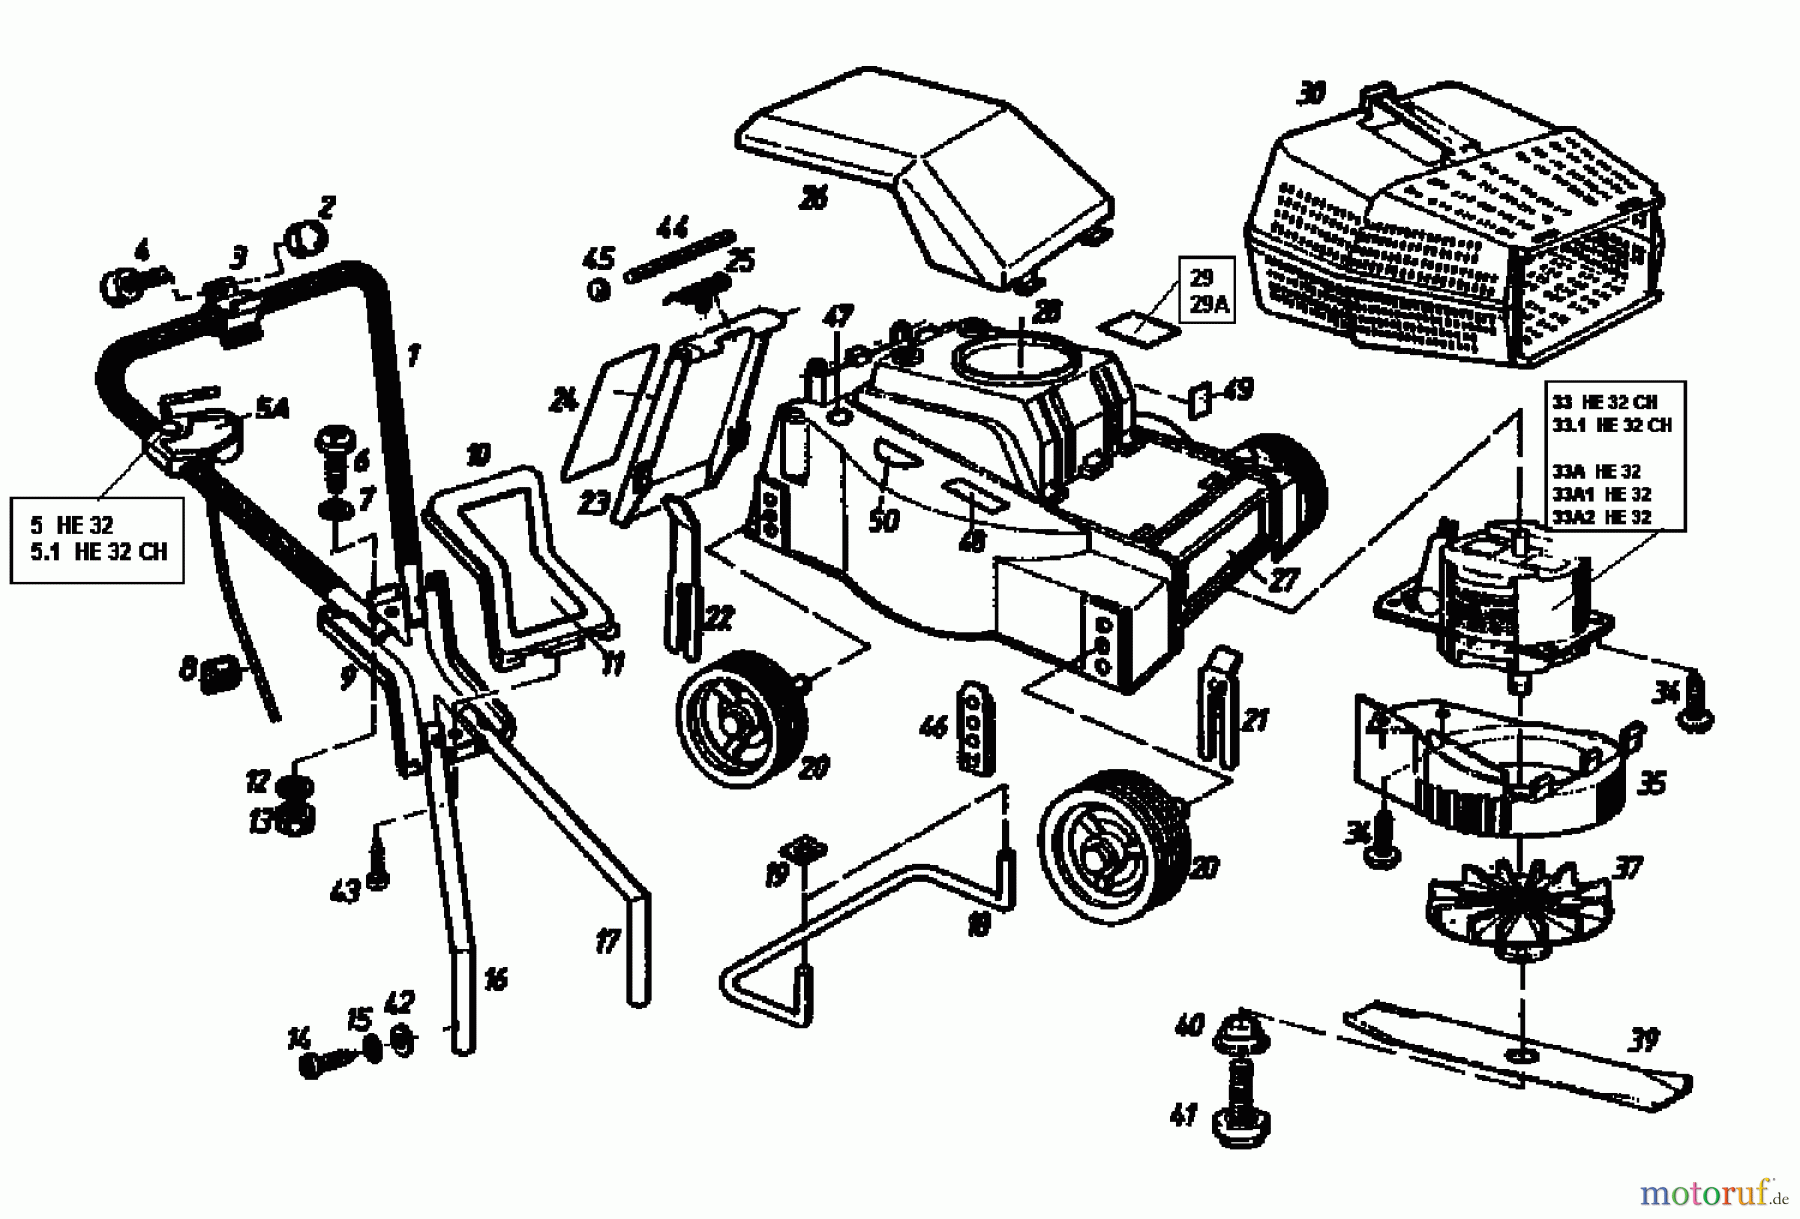  Gutbrod Electric mower HE 32 02872.09  (1990) Basic machine